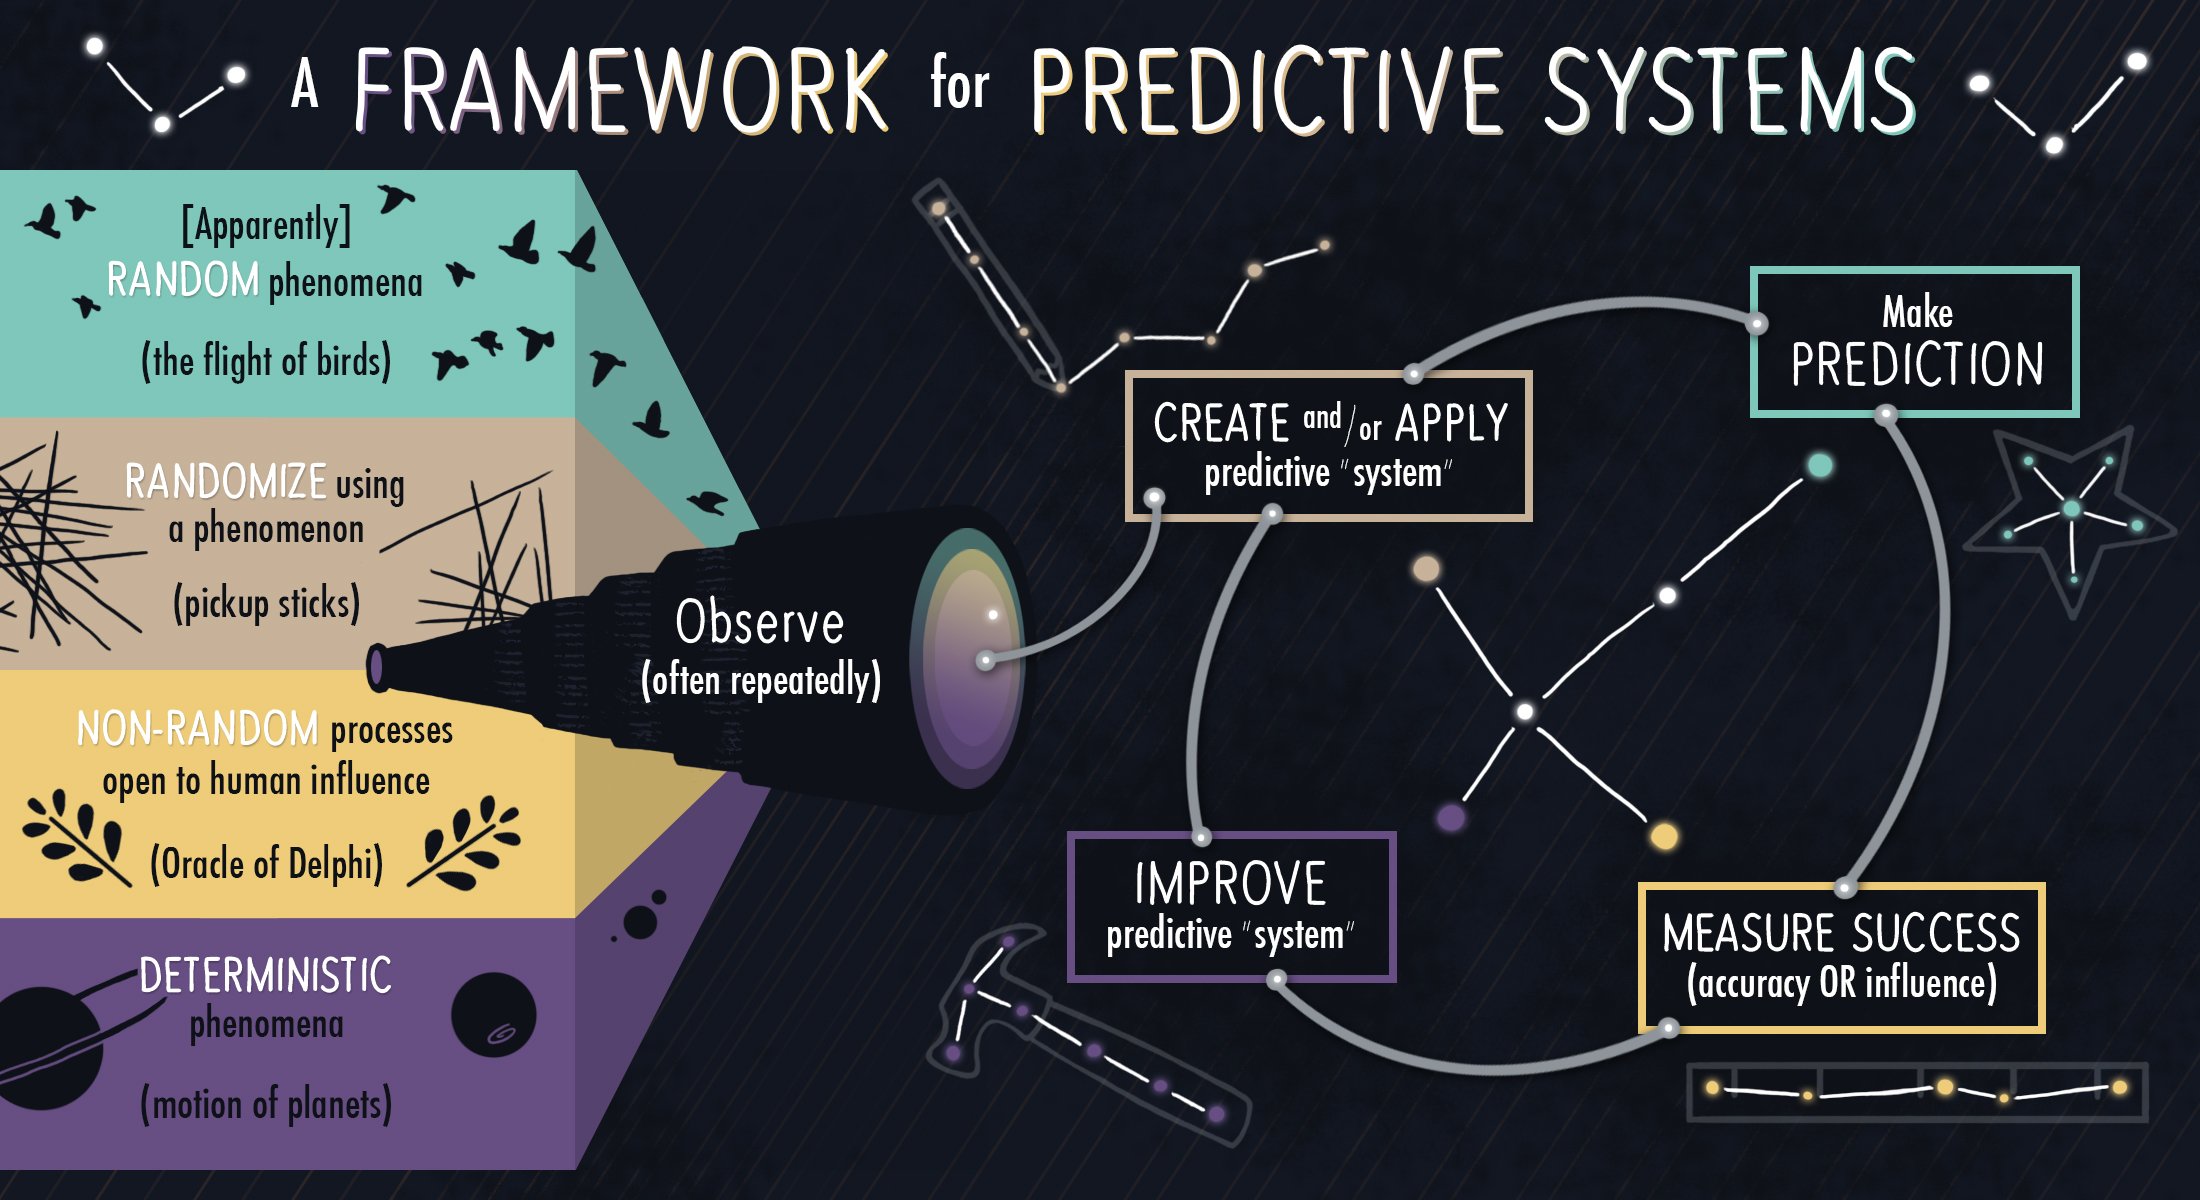 FrameworkPredictiveSystems.jpg